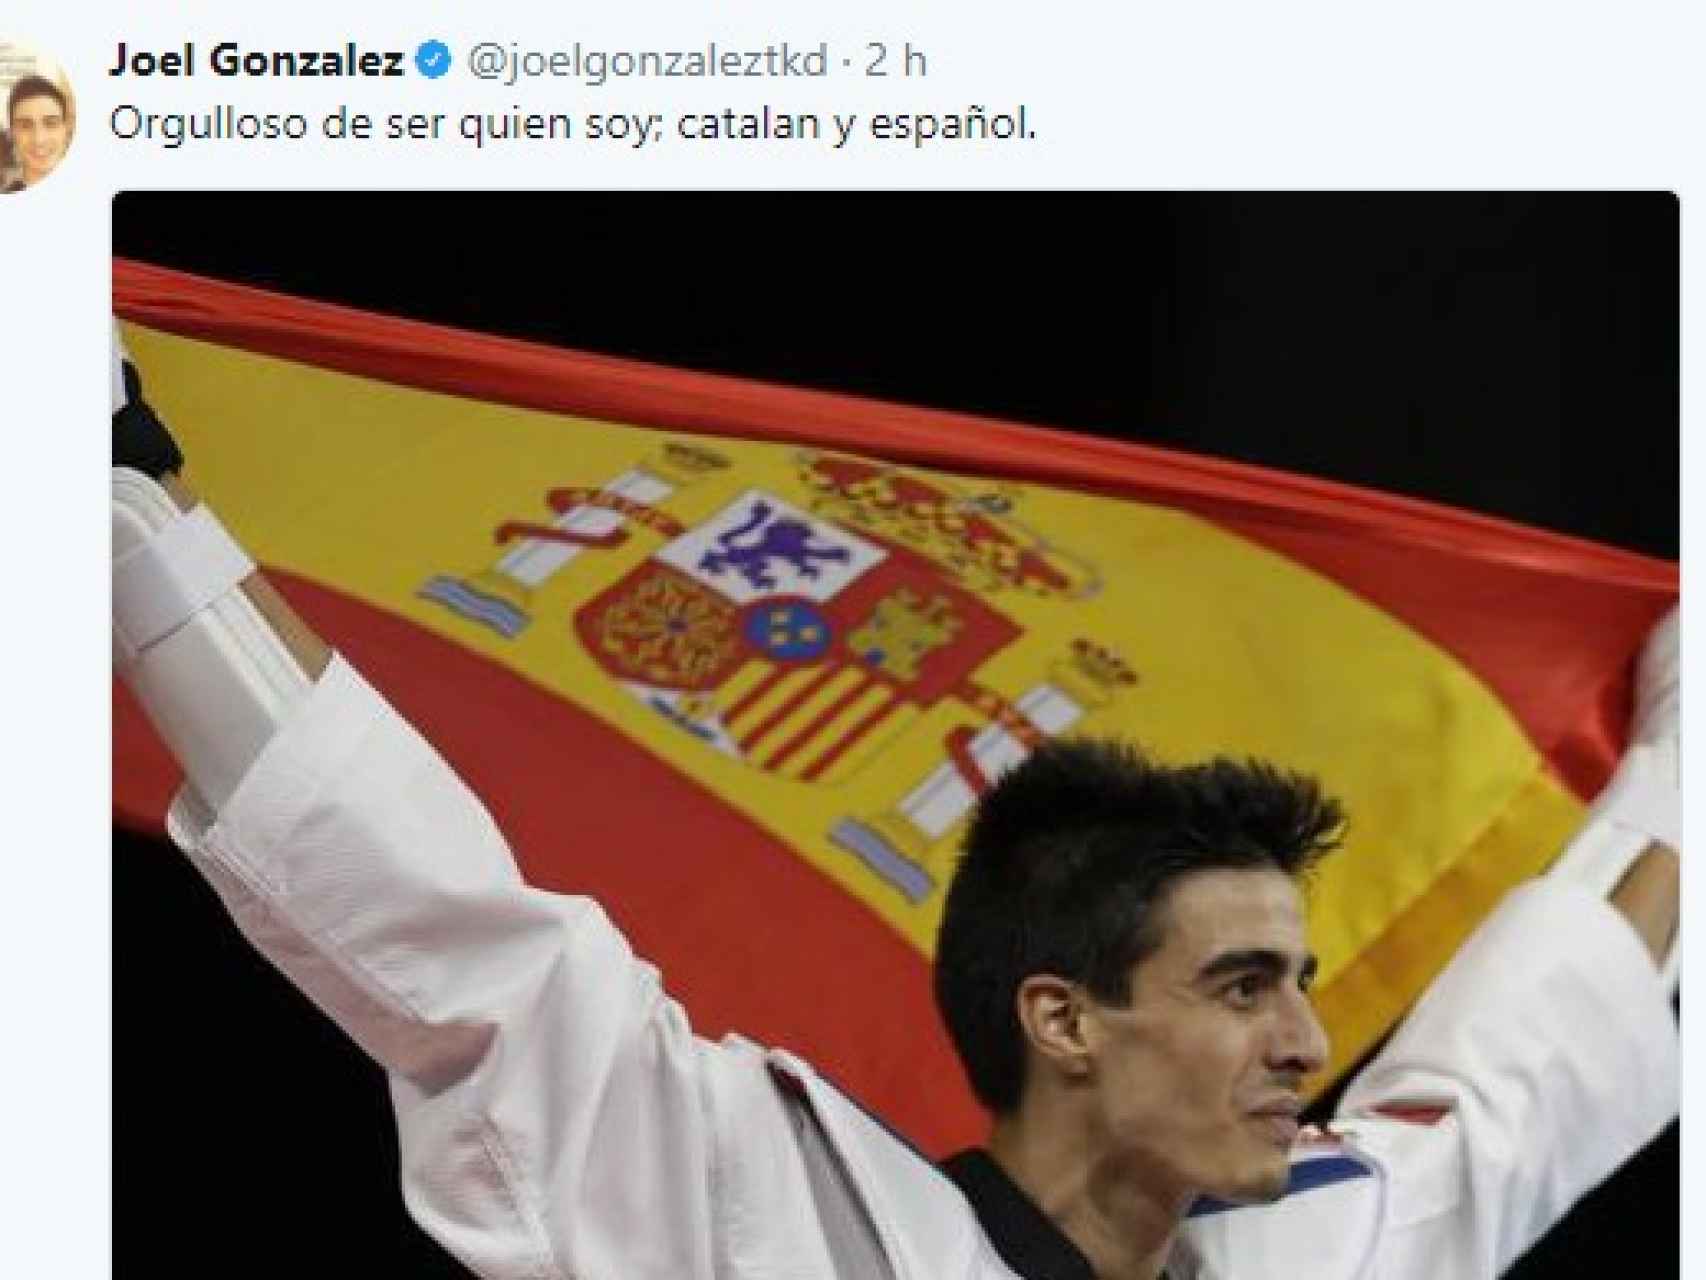 Un mensaje nacionalista en Twitter del deportista Joel Gonzalez